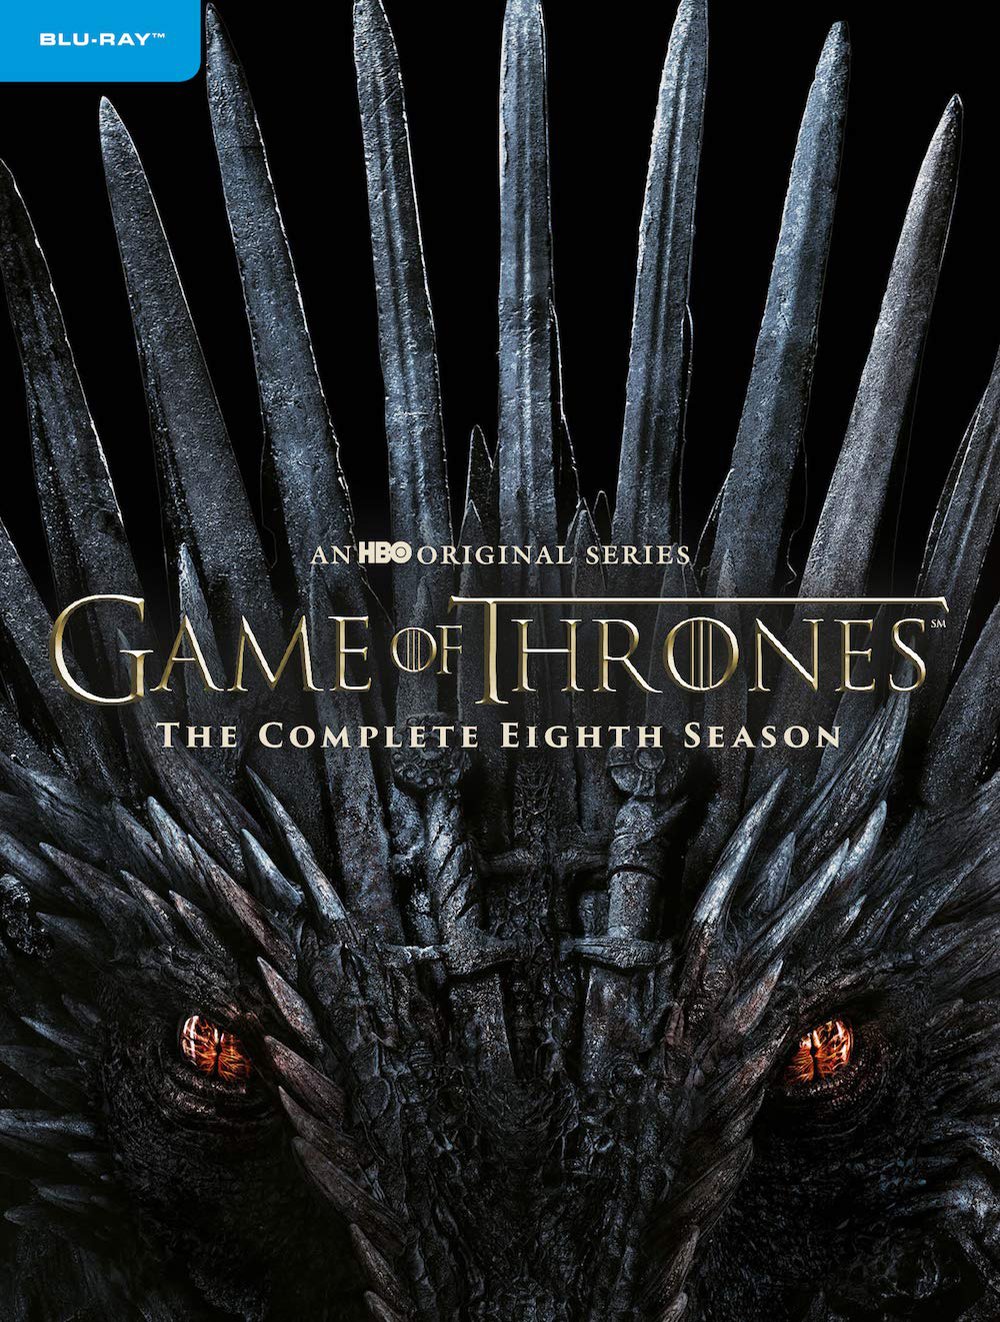 Game of Thrones Season 8 Blu-Ray Box Set Review